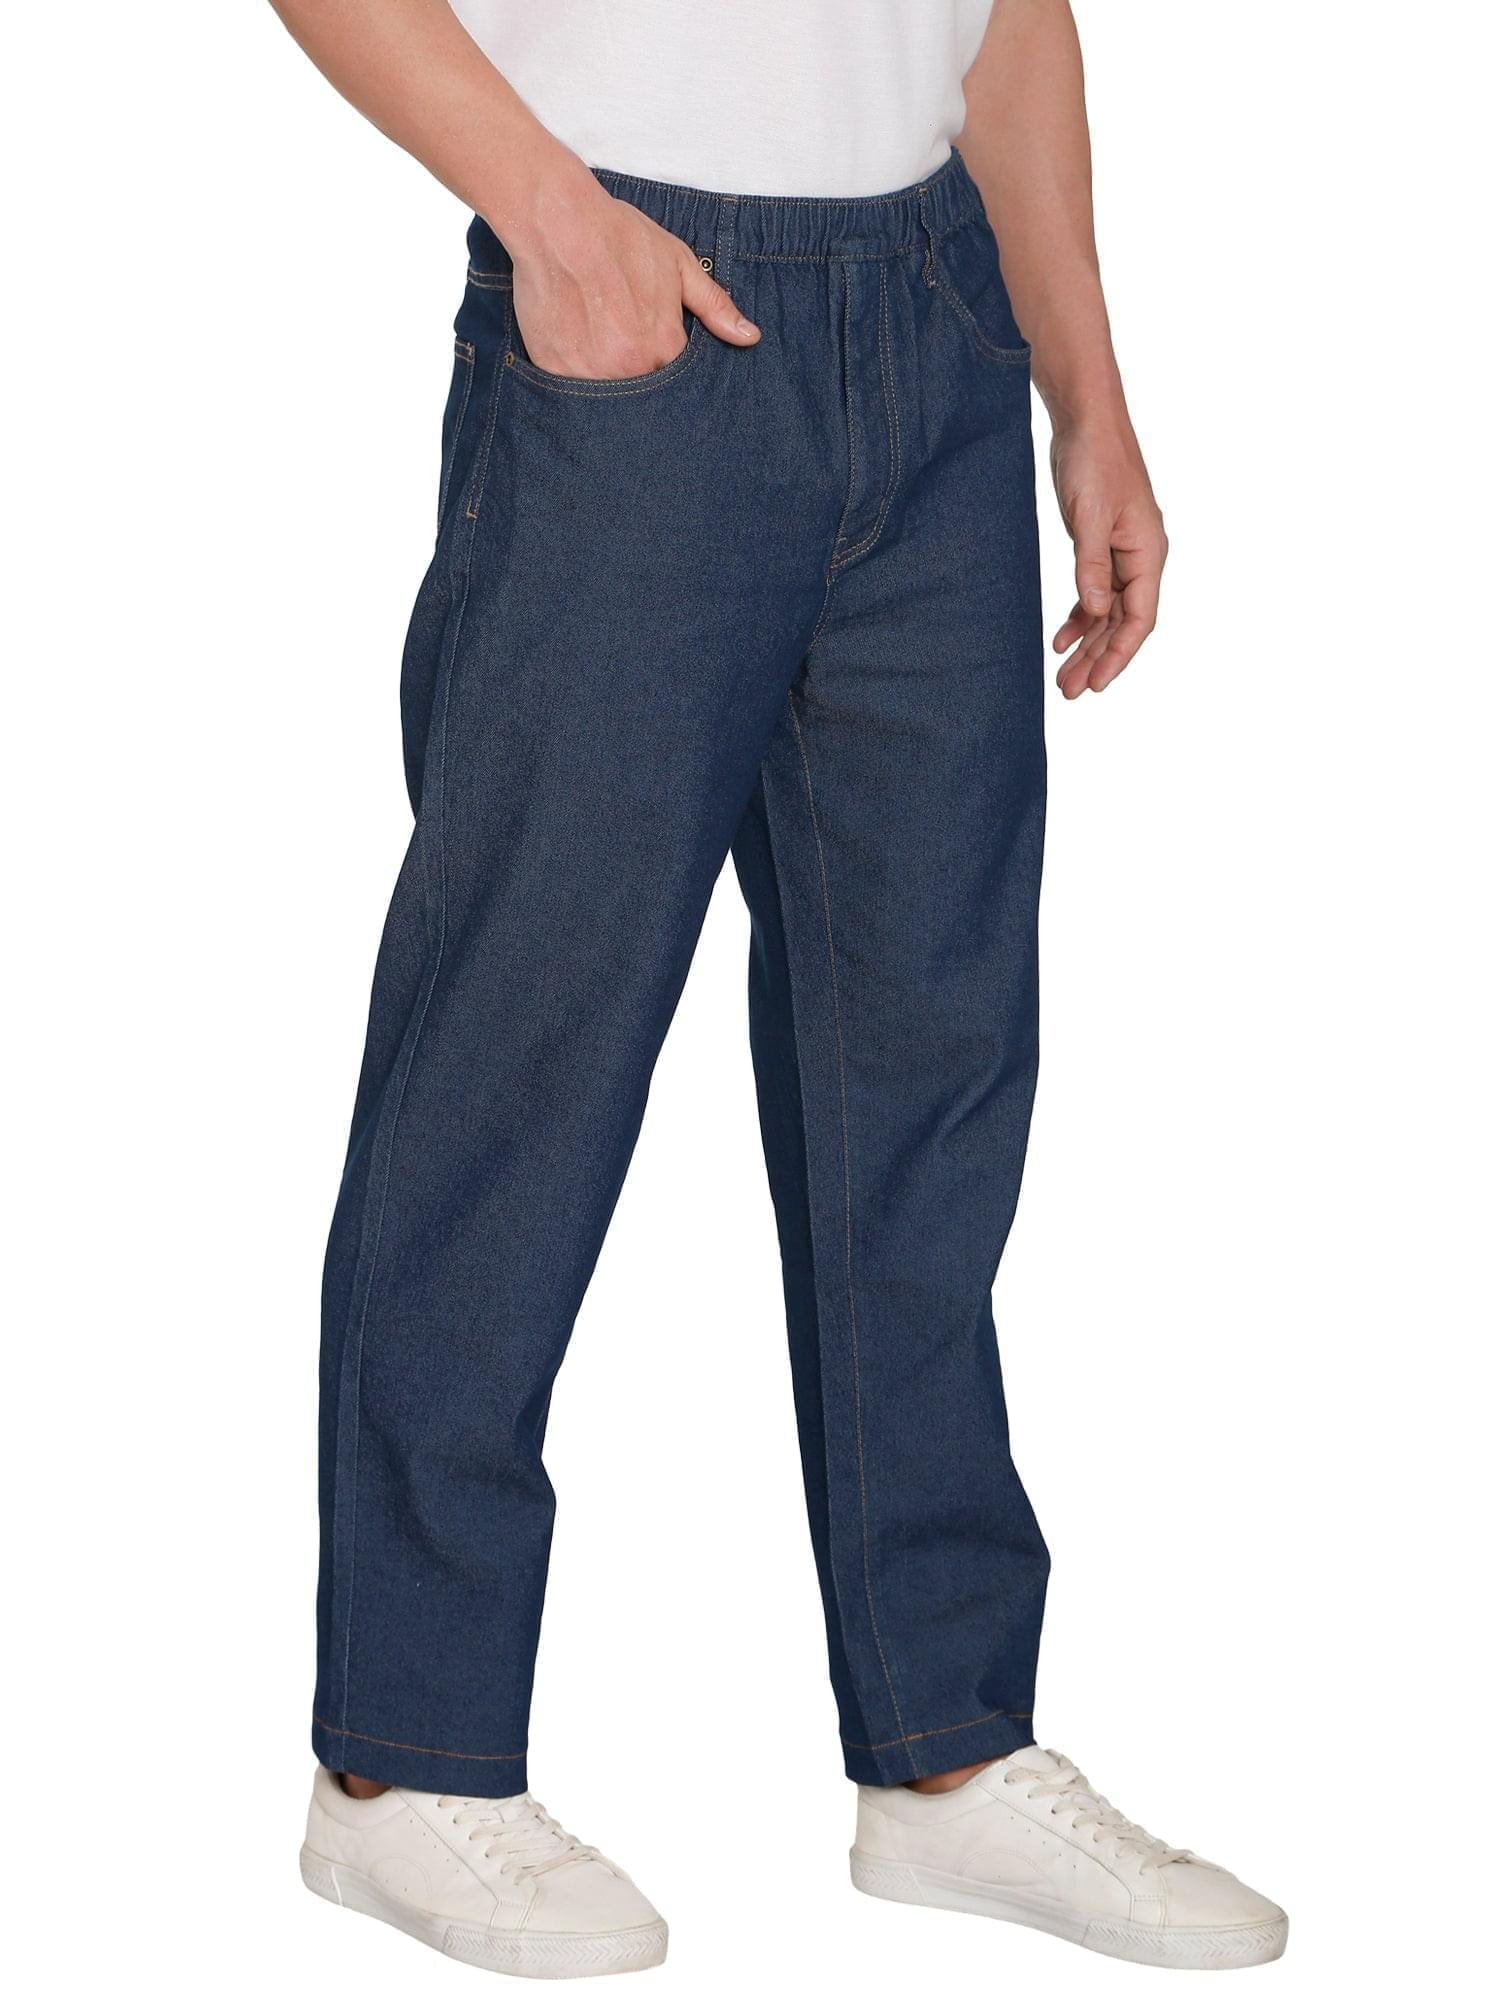 Turtle Bay New York Men's Casual Elastic Waist Denim Pull on Jeans ...